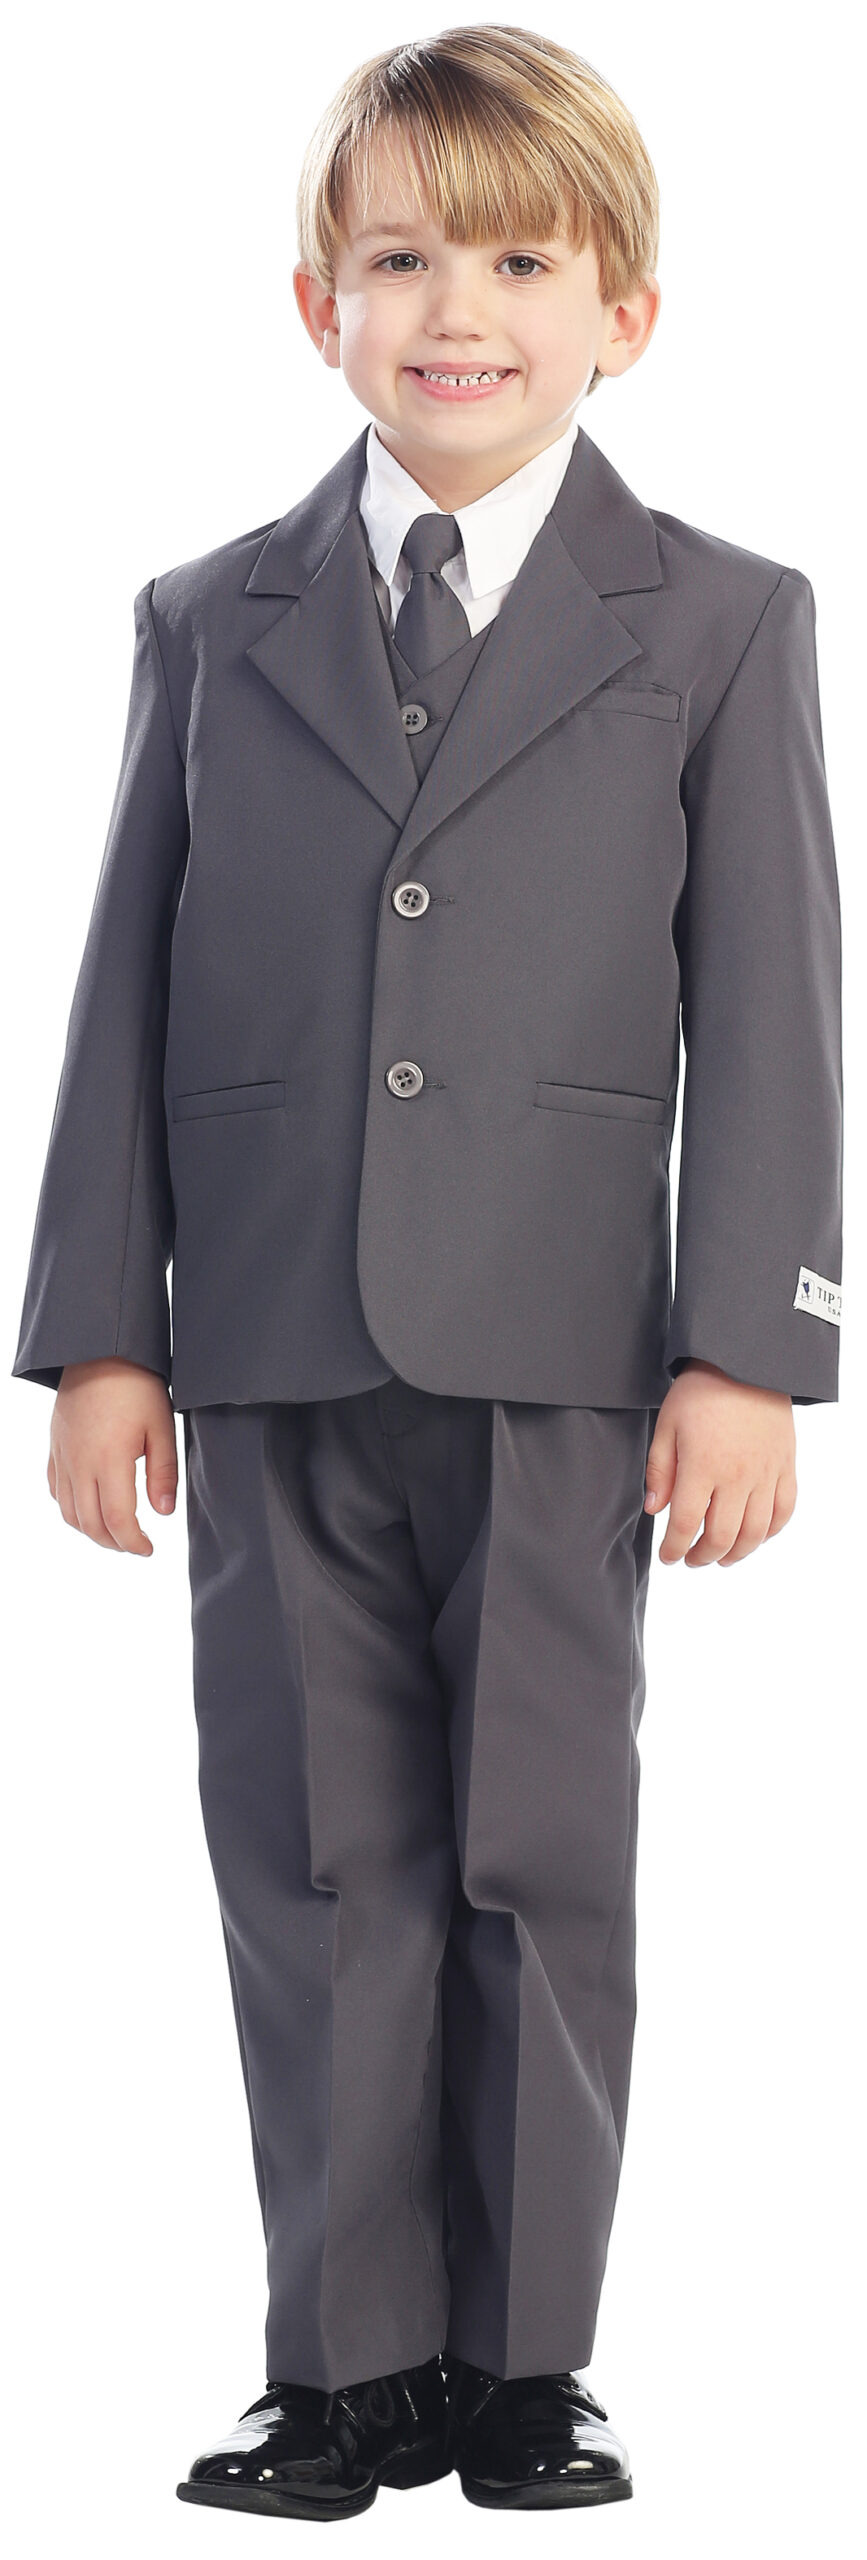 Avery Hill 5-Piece Boy's 2-Button Dress Suit Full-Back Vest - Charcoal M (6 - 12 Months)